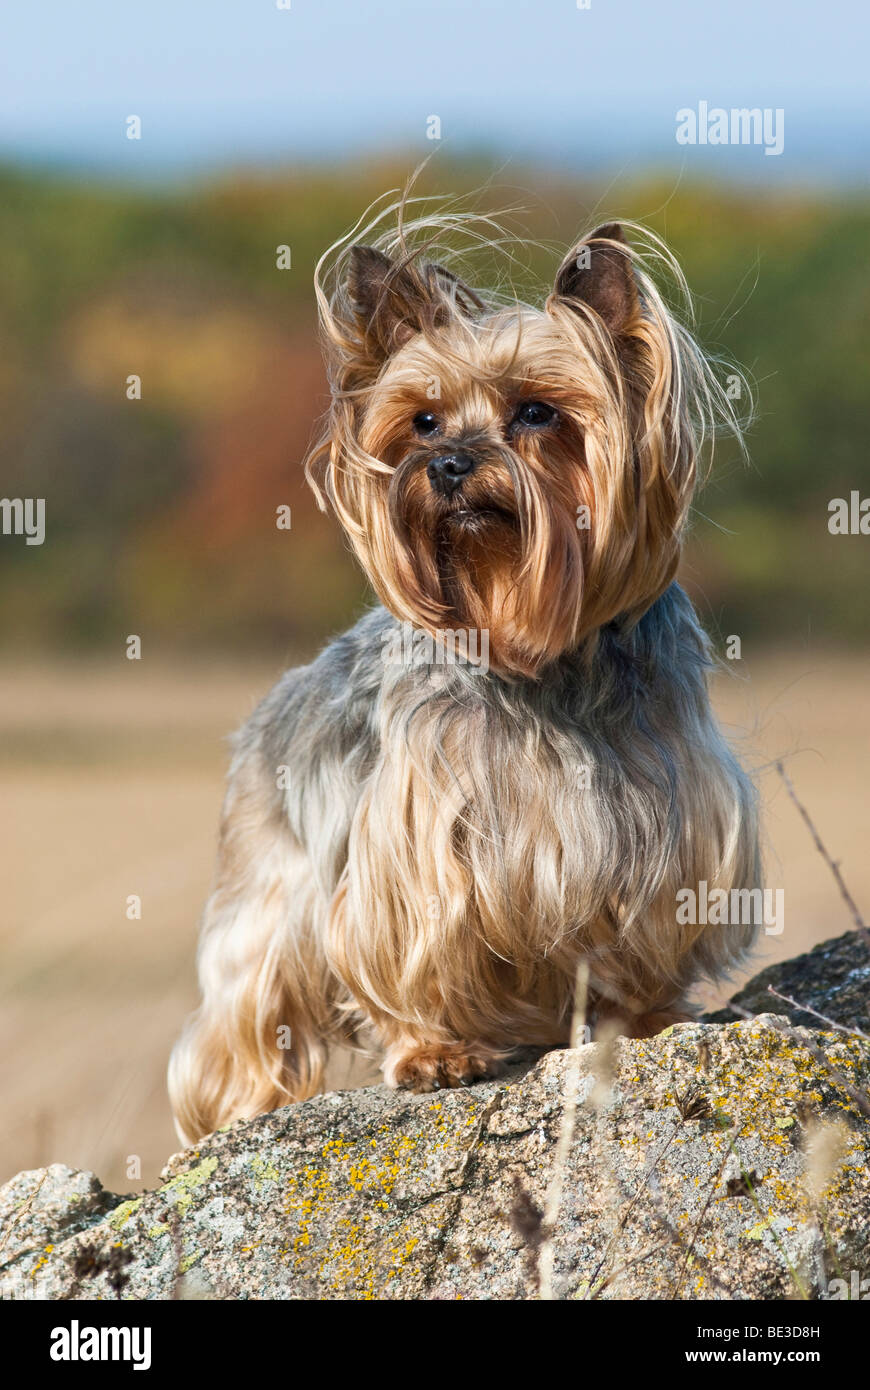 Yorkshire Terrier, Yorkie, standing on rocks Stock Photo